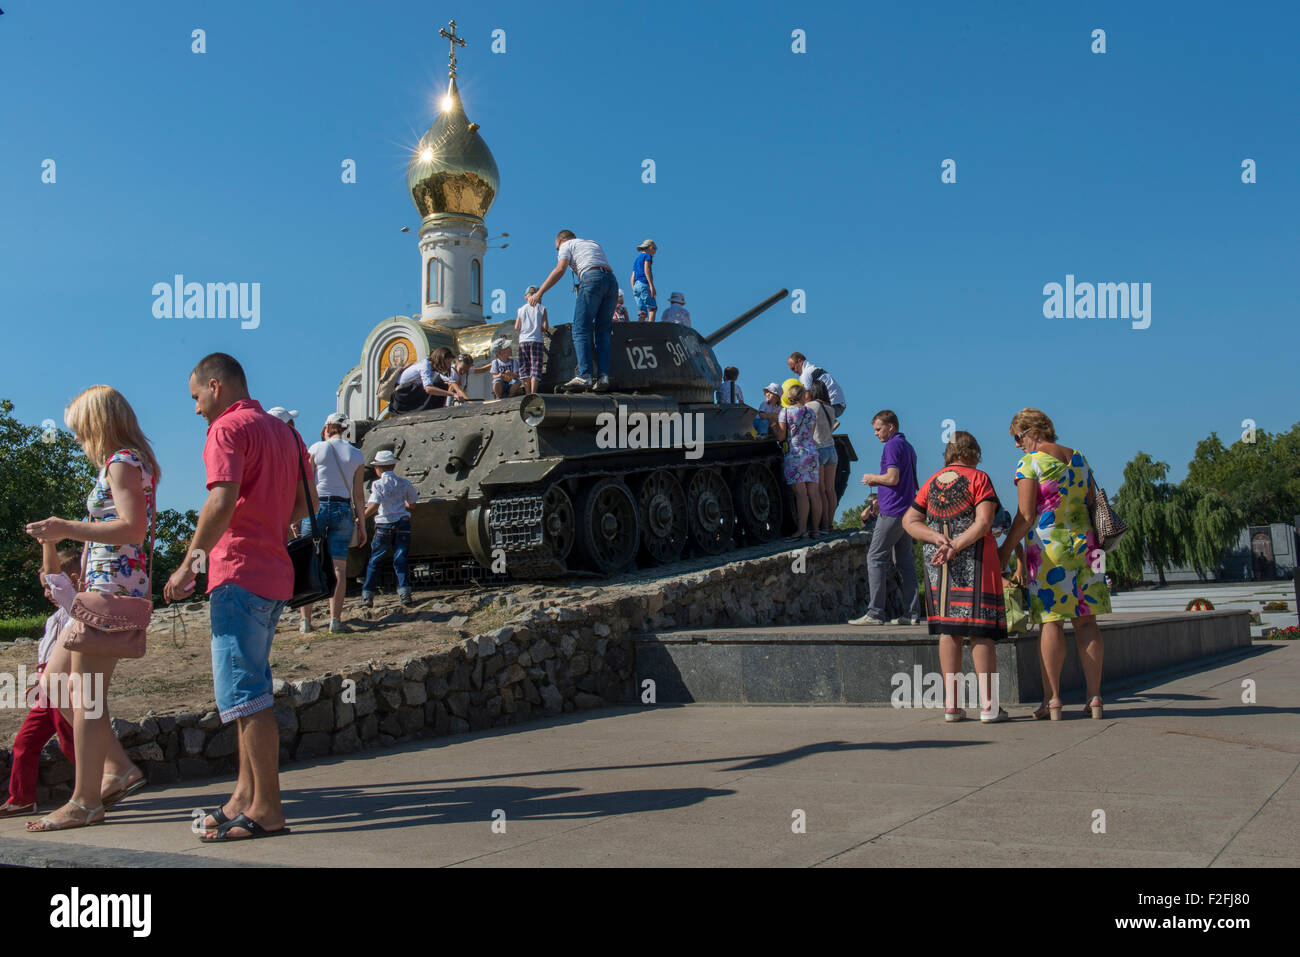 People At Tank Monument - 25th Anniversary of the Pridnestrovian Moldavian Republic PMR, Transnistria, Soviet USSR Moldova Stock Photo